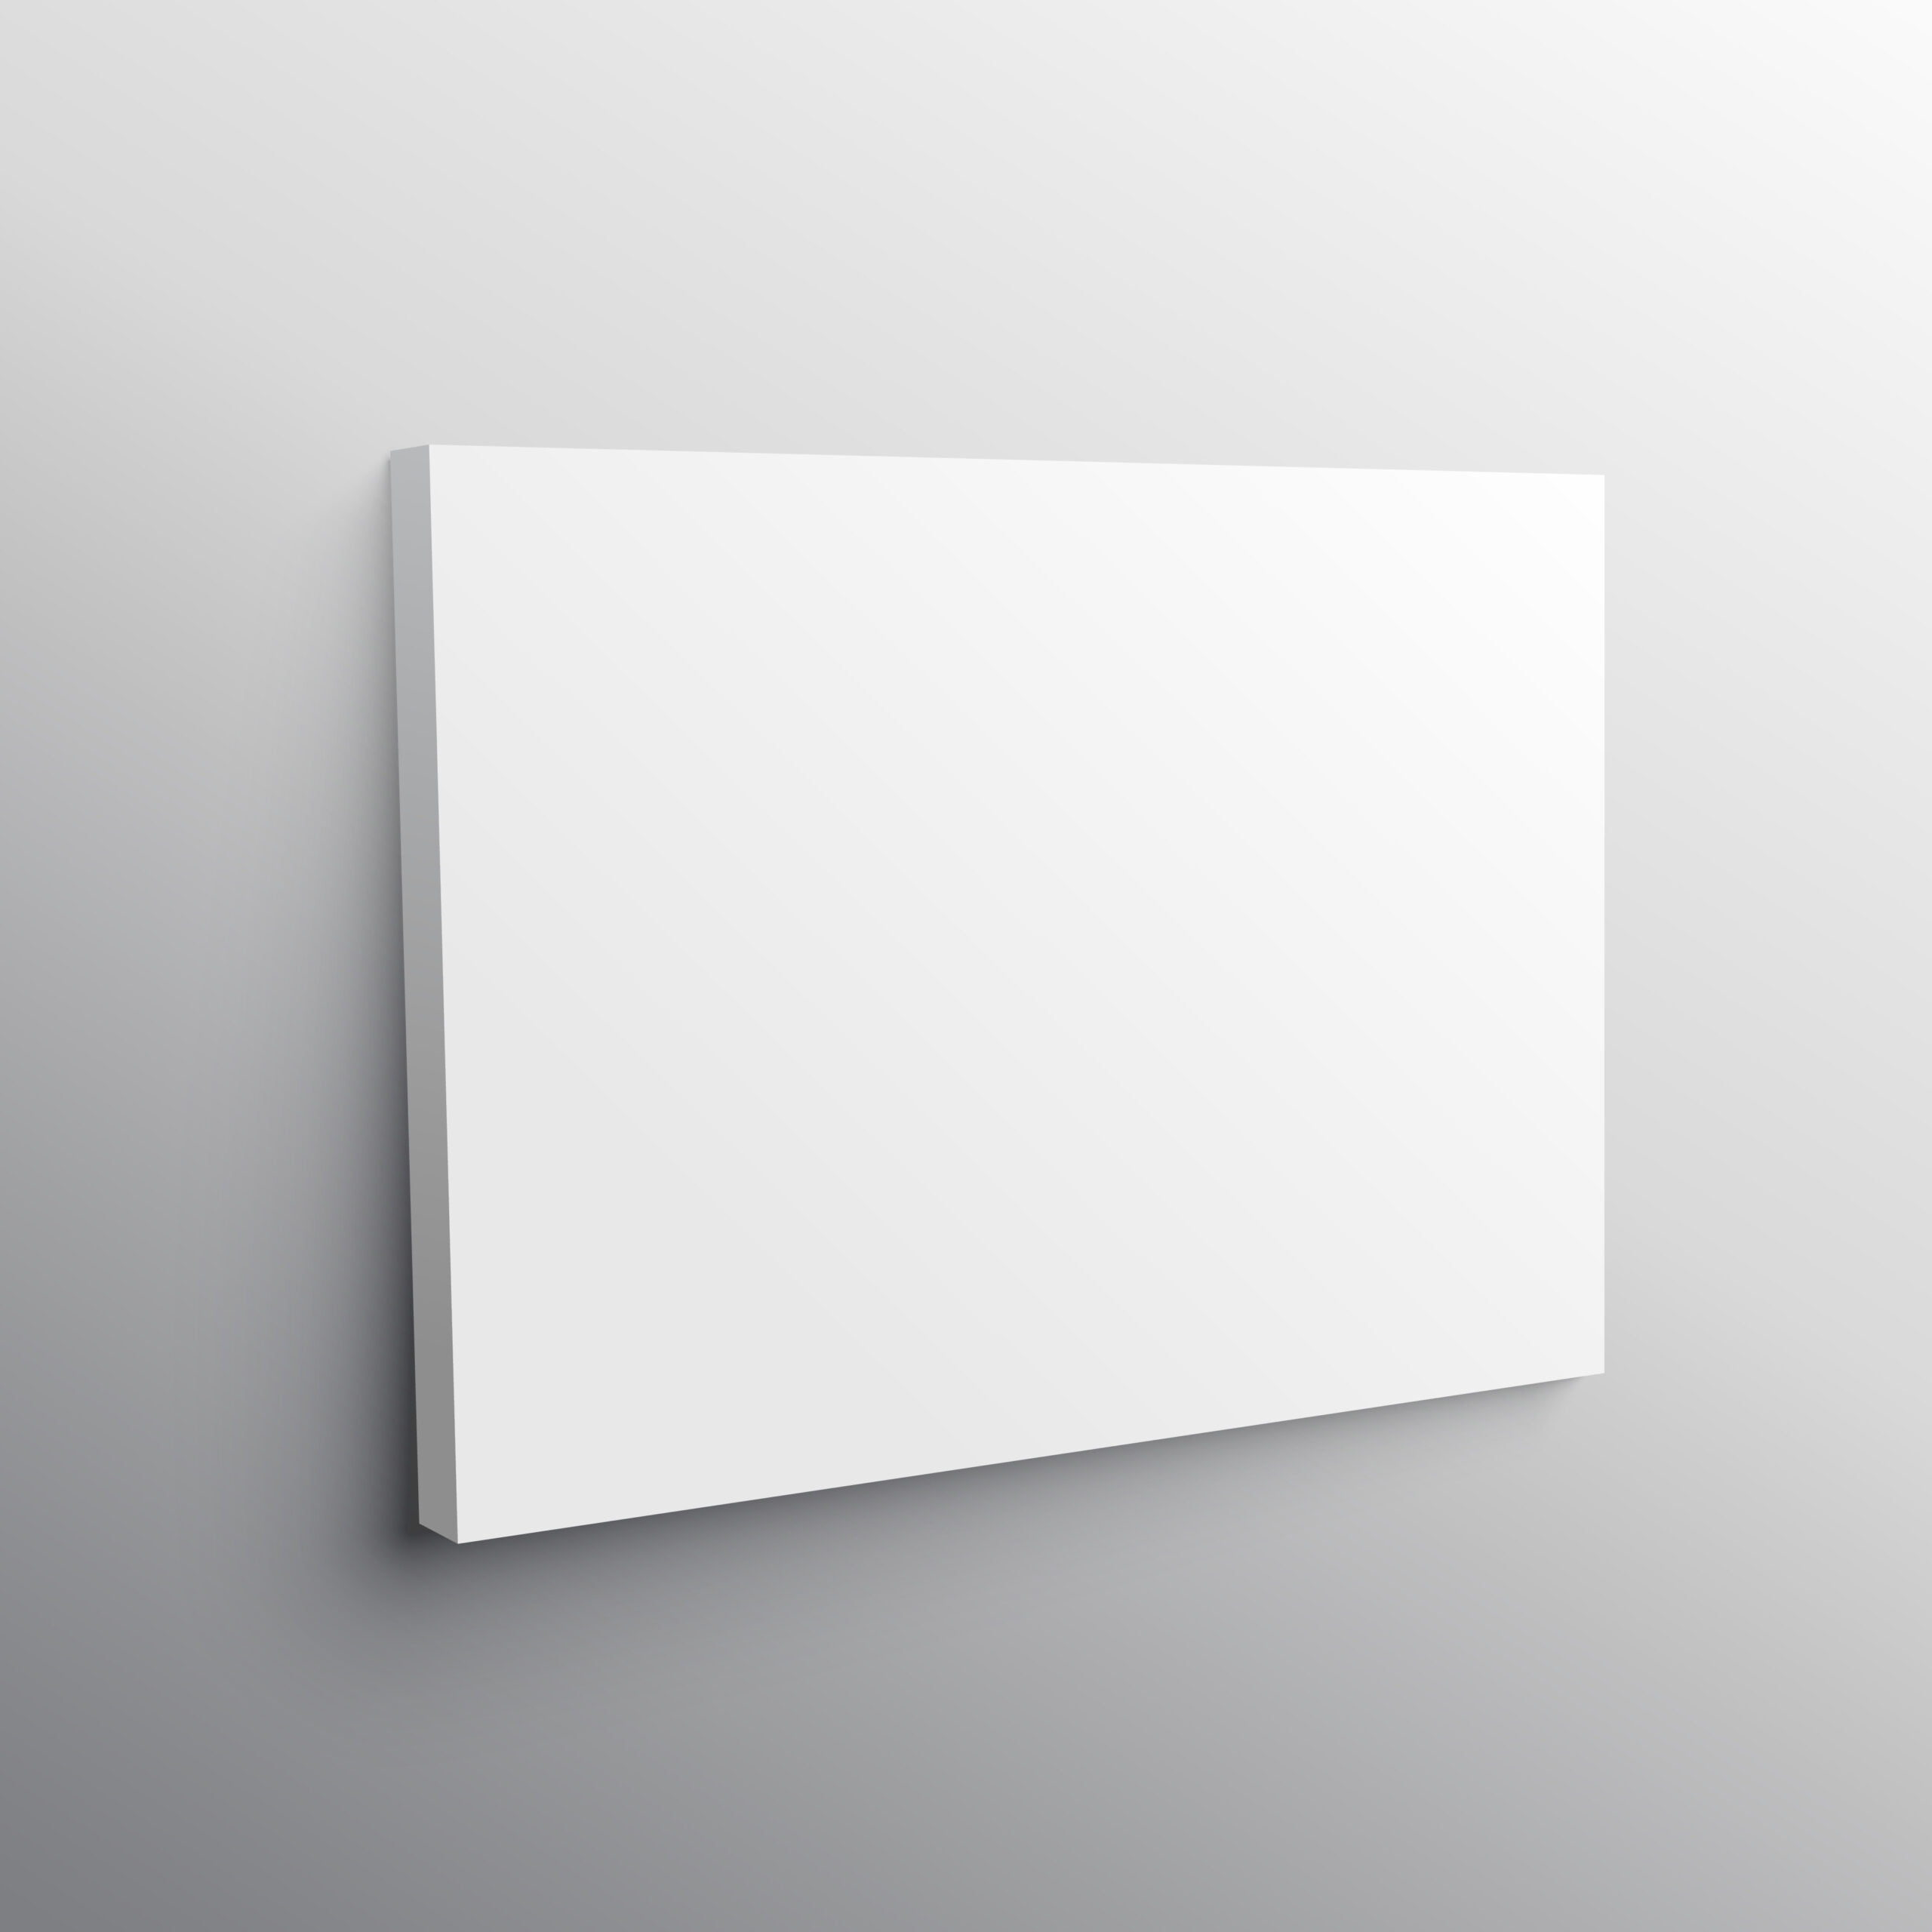 empty wall canvas display mockup vector